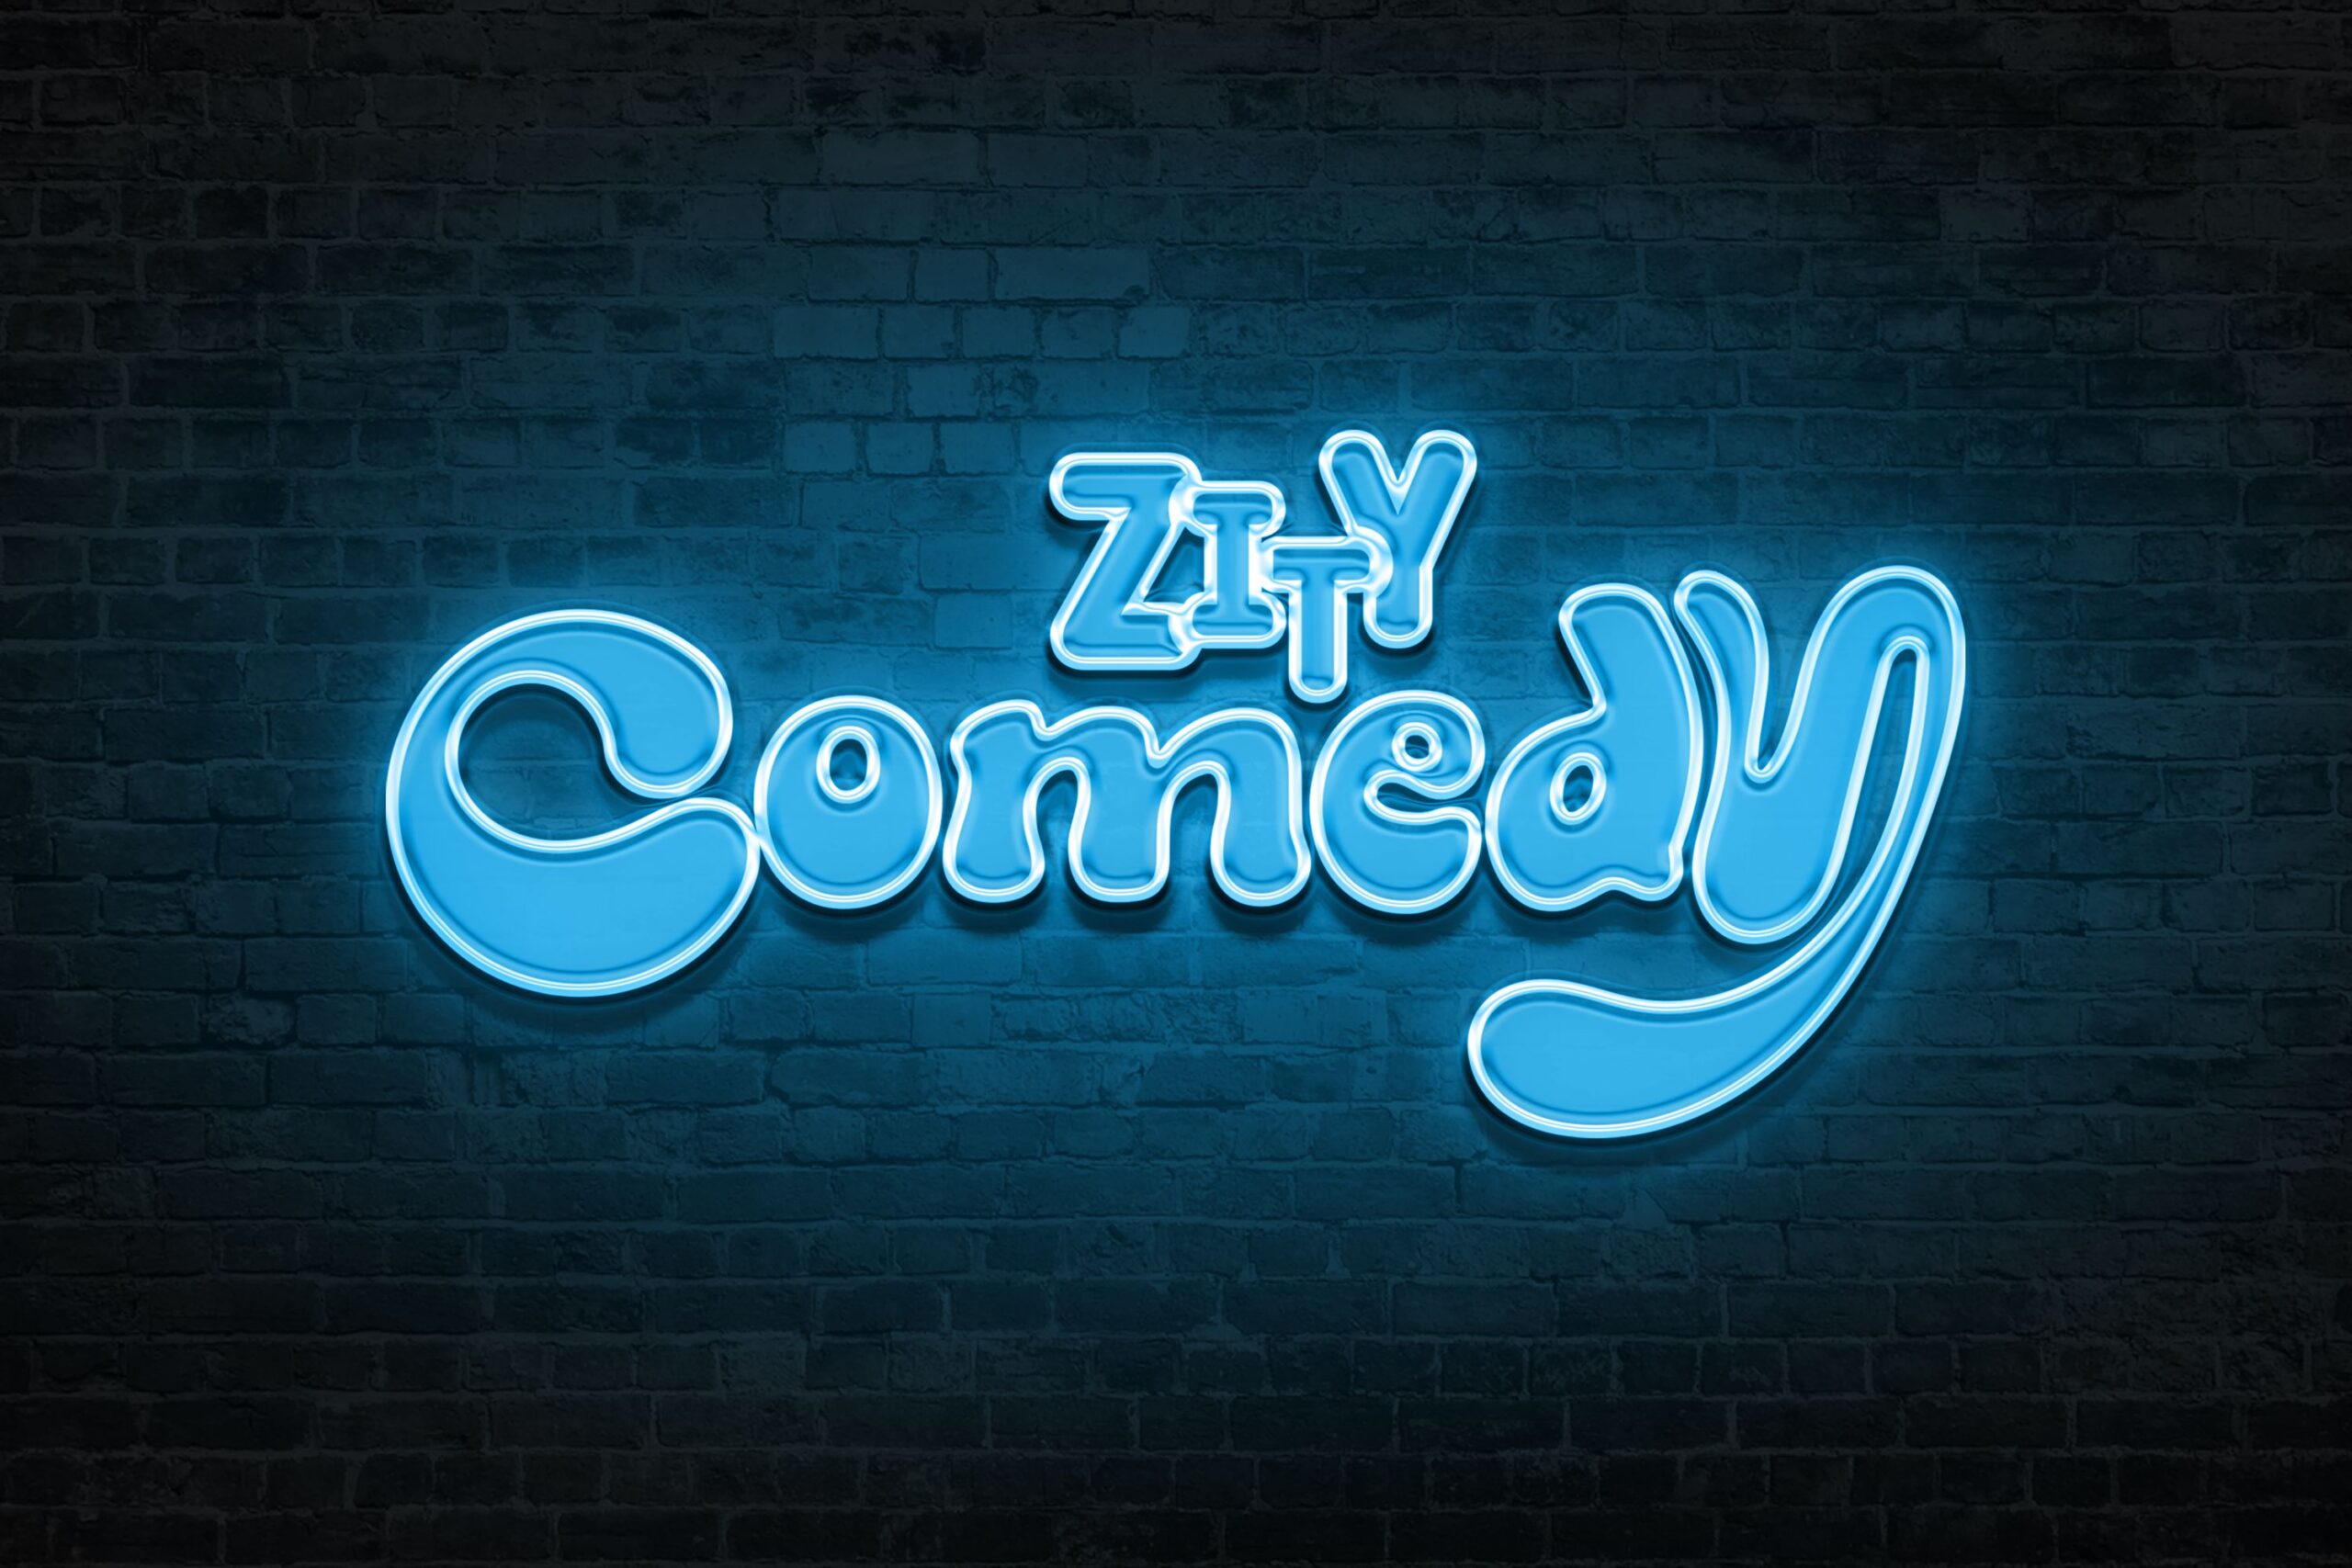 Entradas para Zity Comedy en Espacio Zity. 